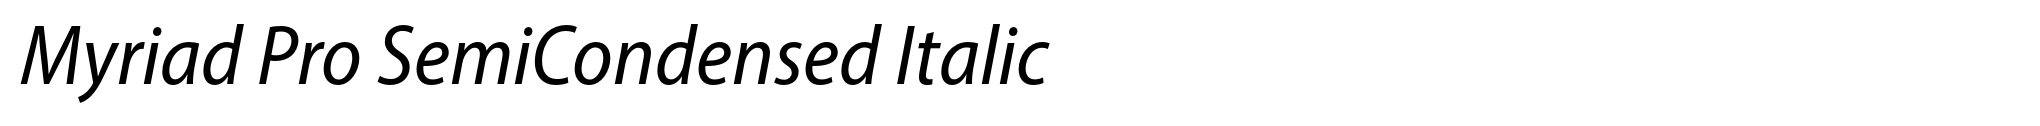 Myriad Pro SemiCondensed Italic image